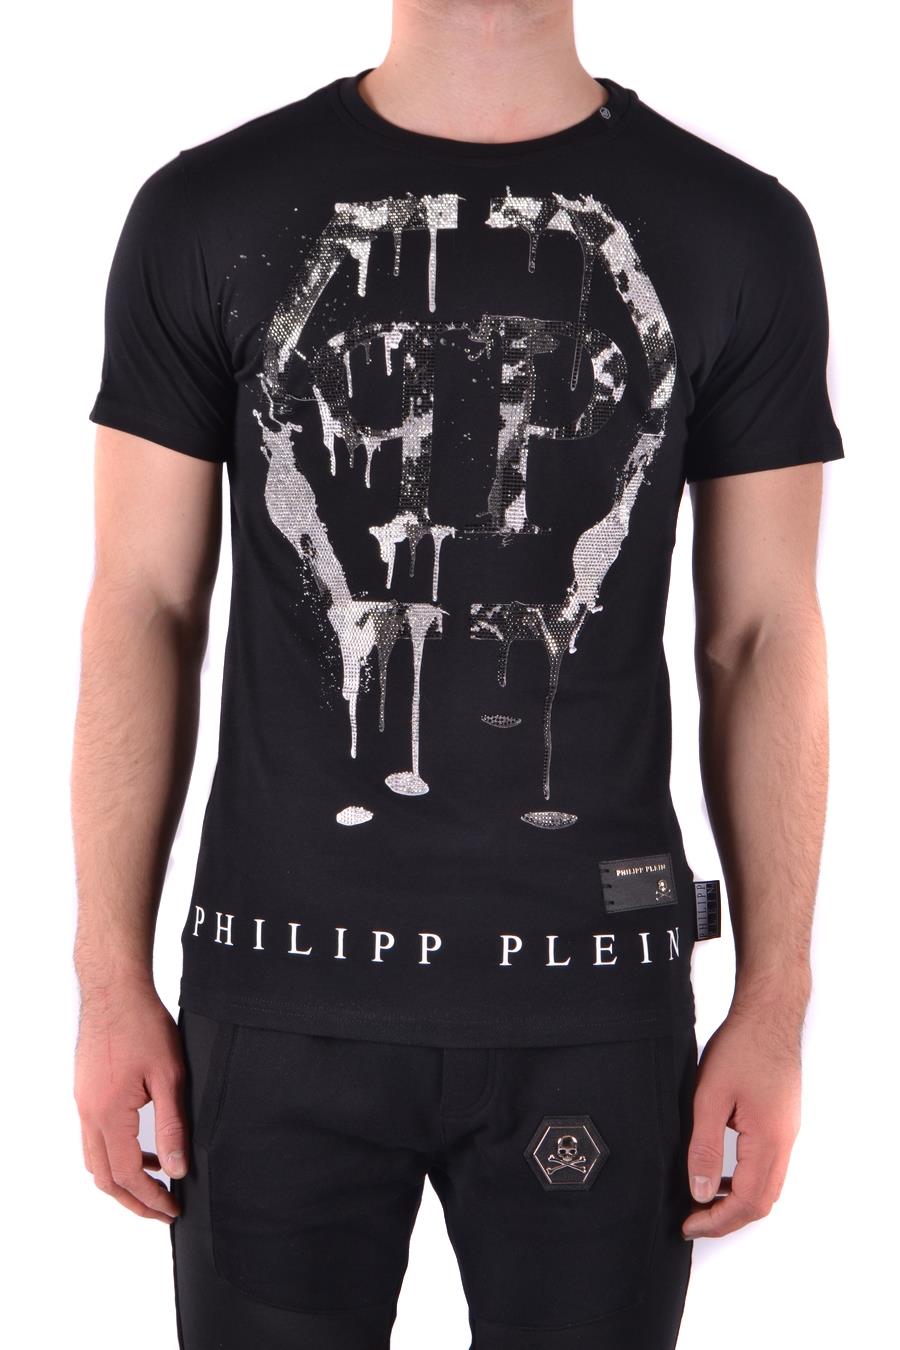 philipp plein shirts price